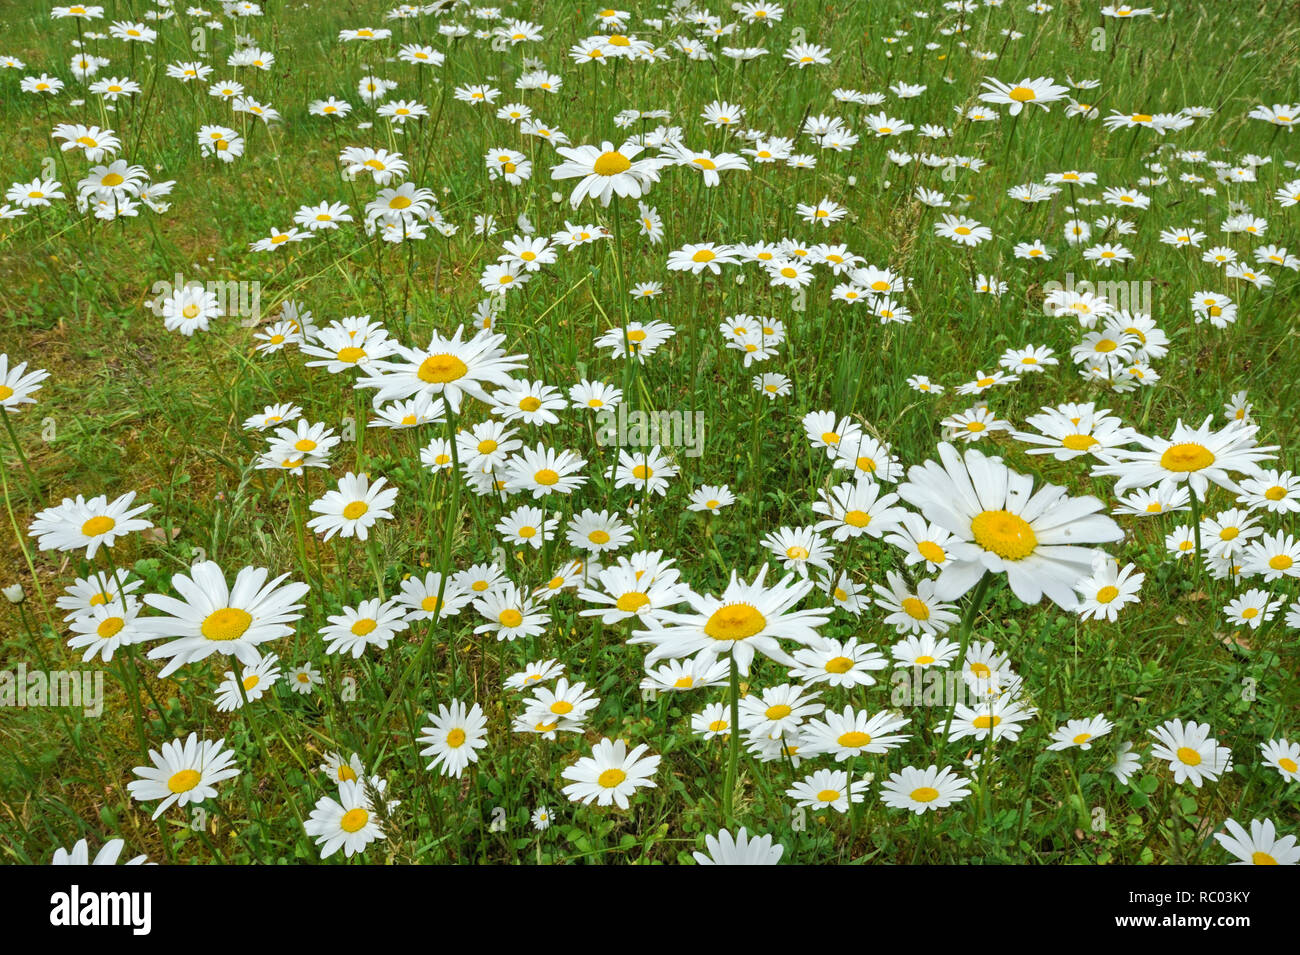 Wiese mit Margeriten | prato con oxeye daisy, margherites Foto Stock